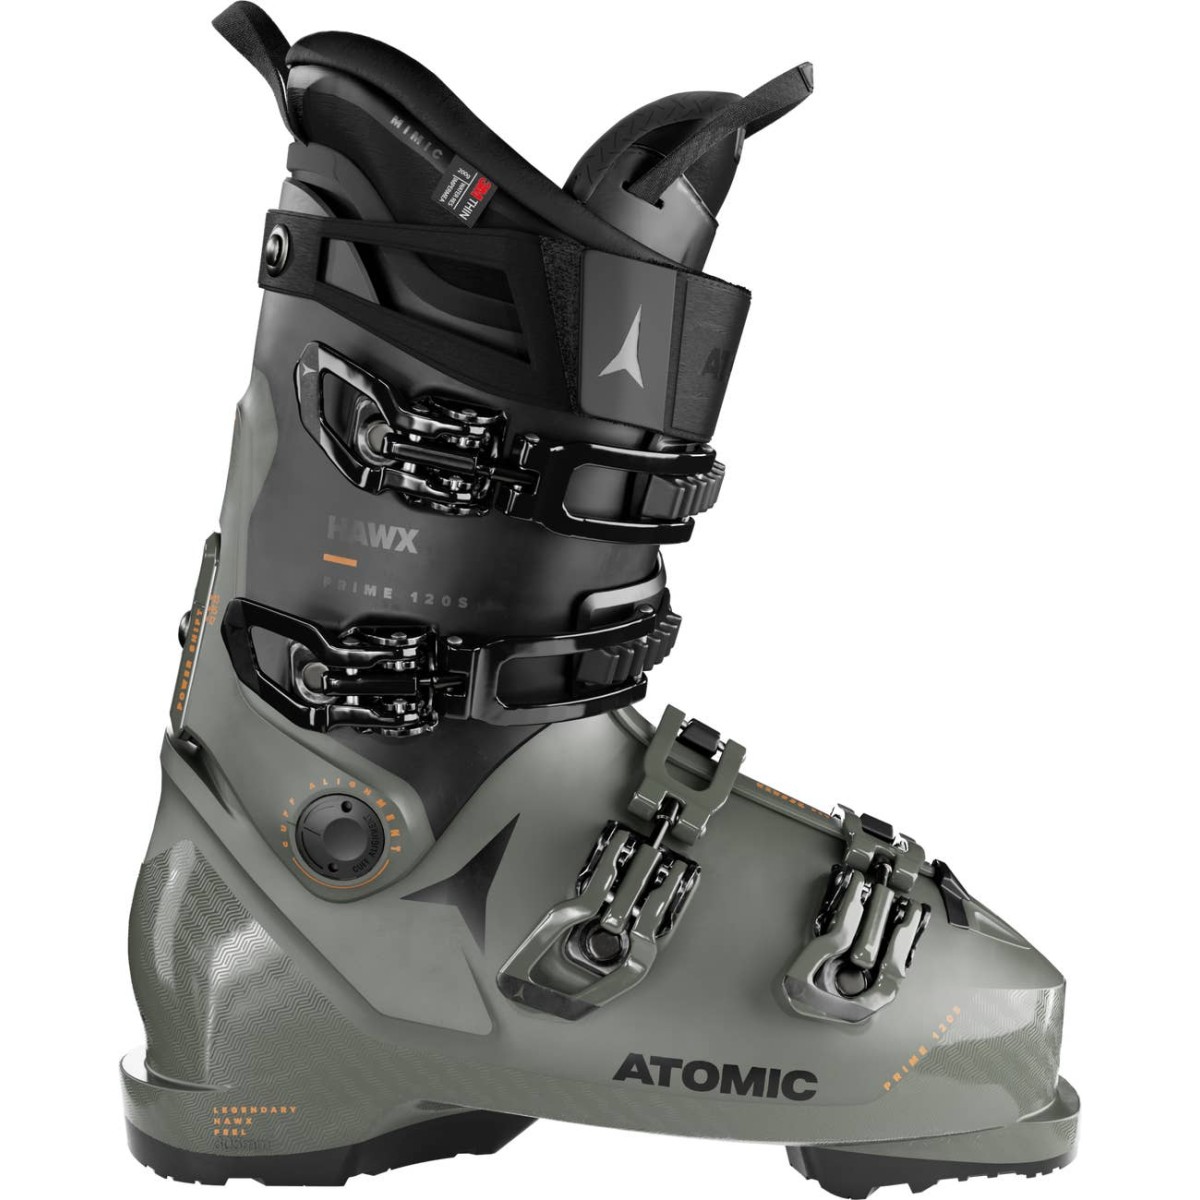 ATOMIC HAWX PRIME 120 S GW alpine ski boots - army green/black